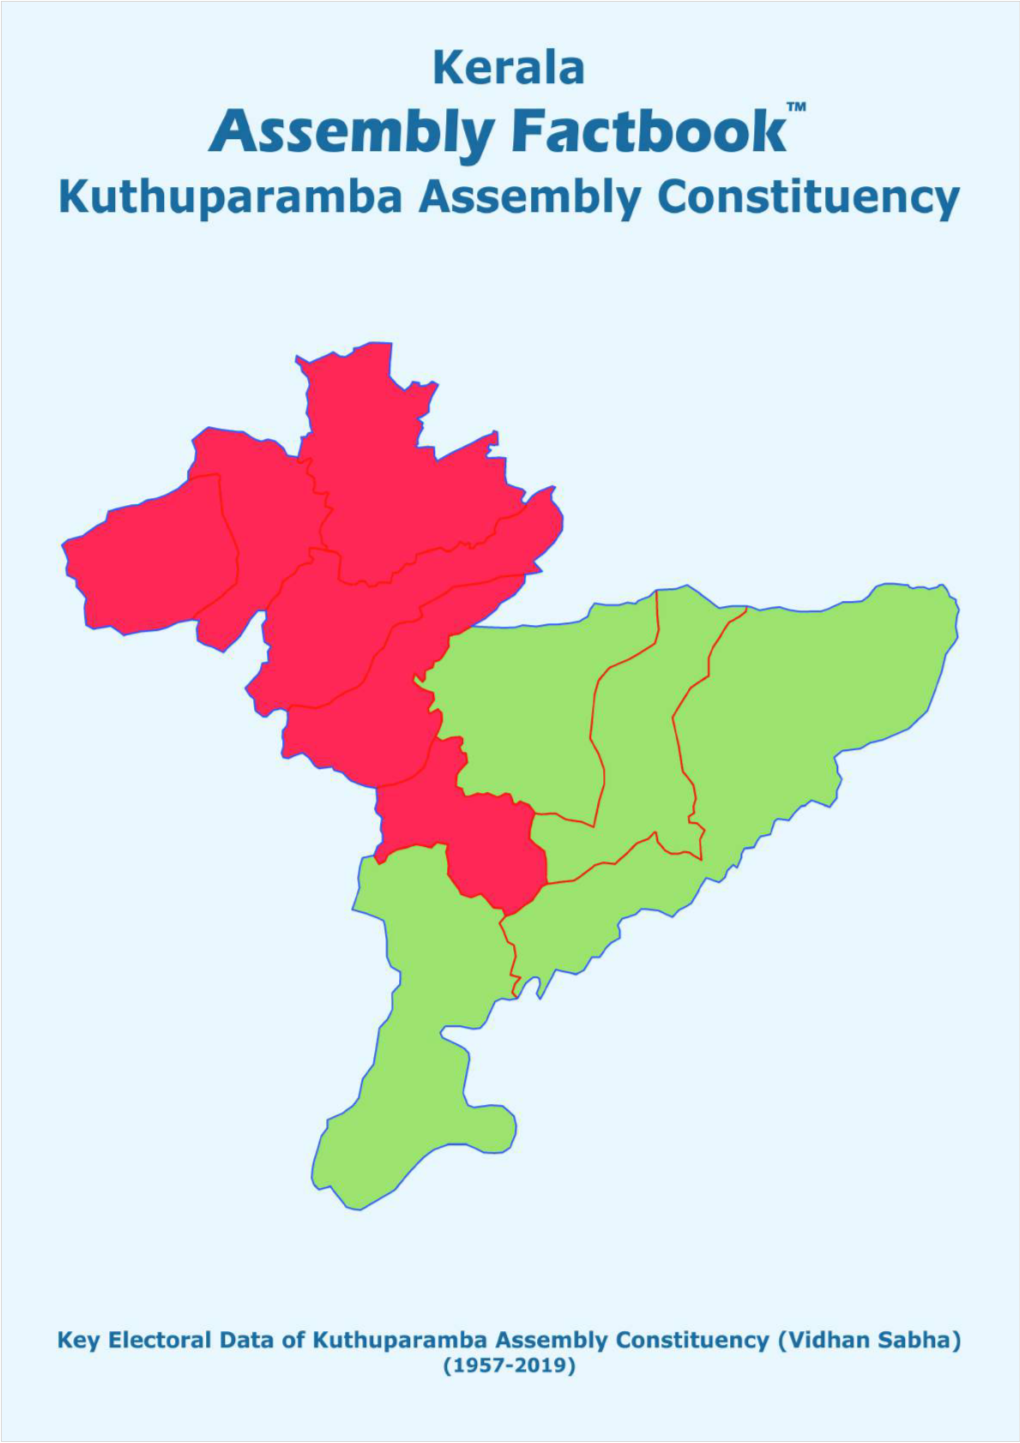 Key Electoral Data of Kuthuparamba Assembly Constituency